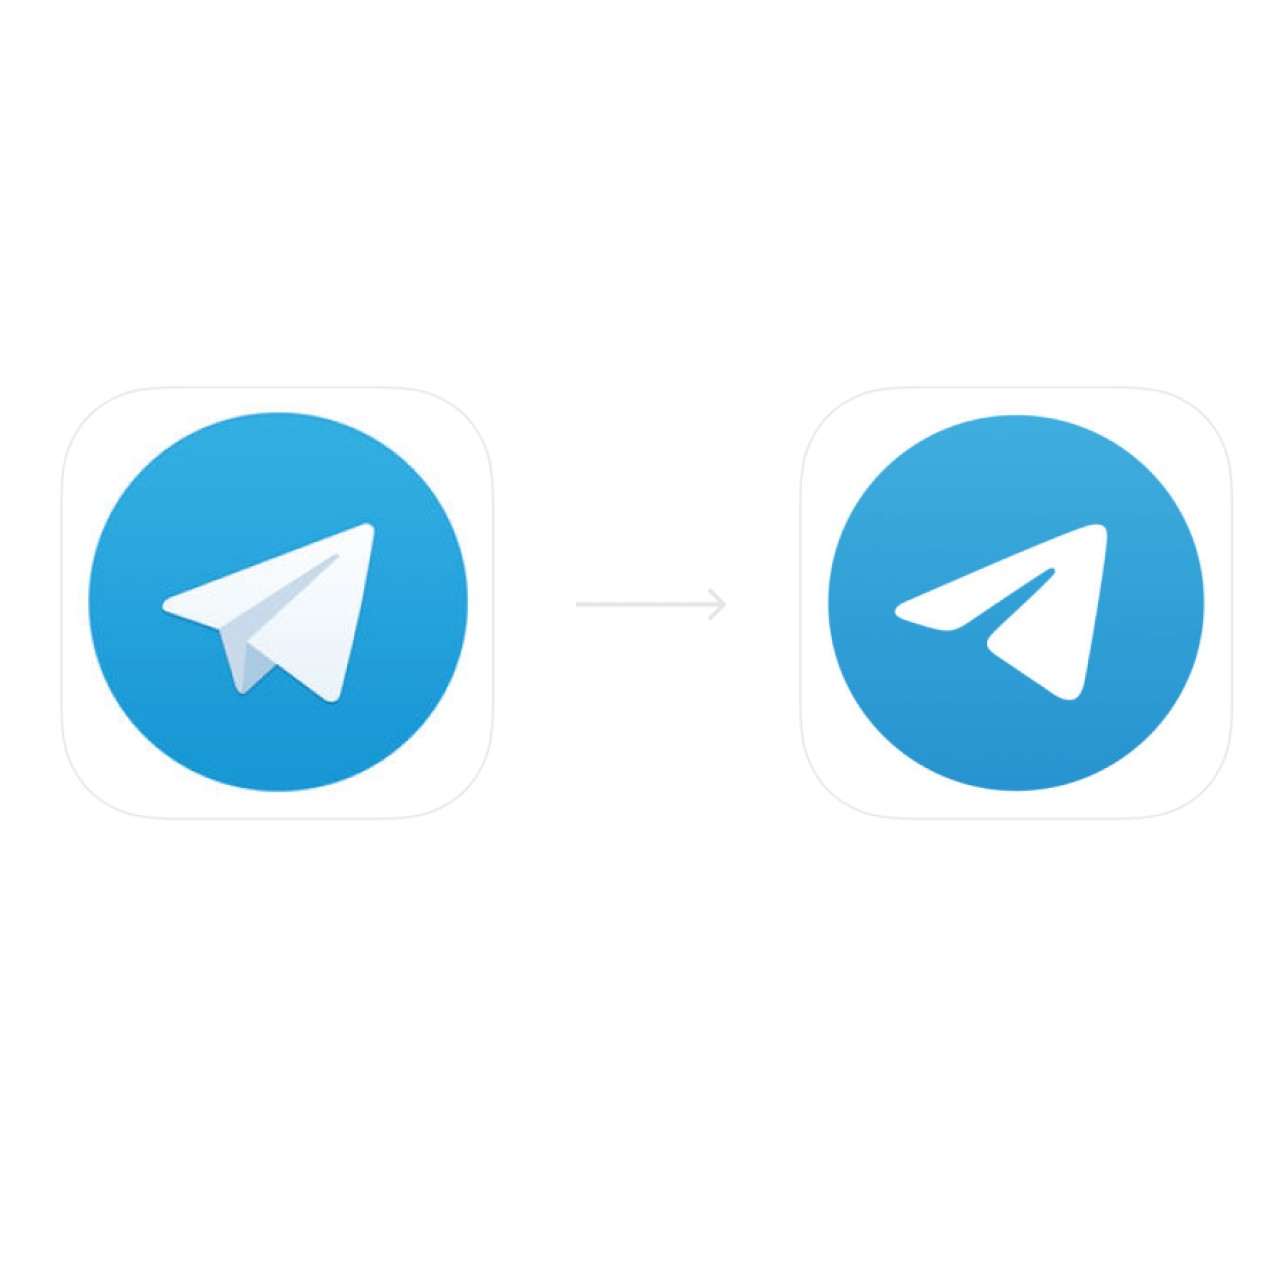 Телеграм год. Логотип телеграмма. Значок телеграм. Маленький значок телеграм. Значок телеграмм новый.